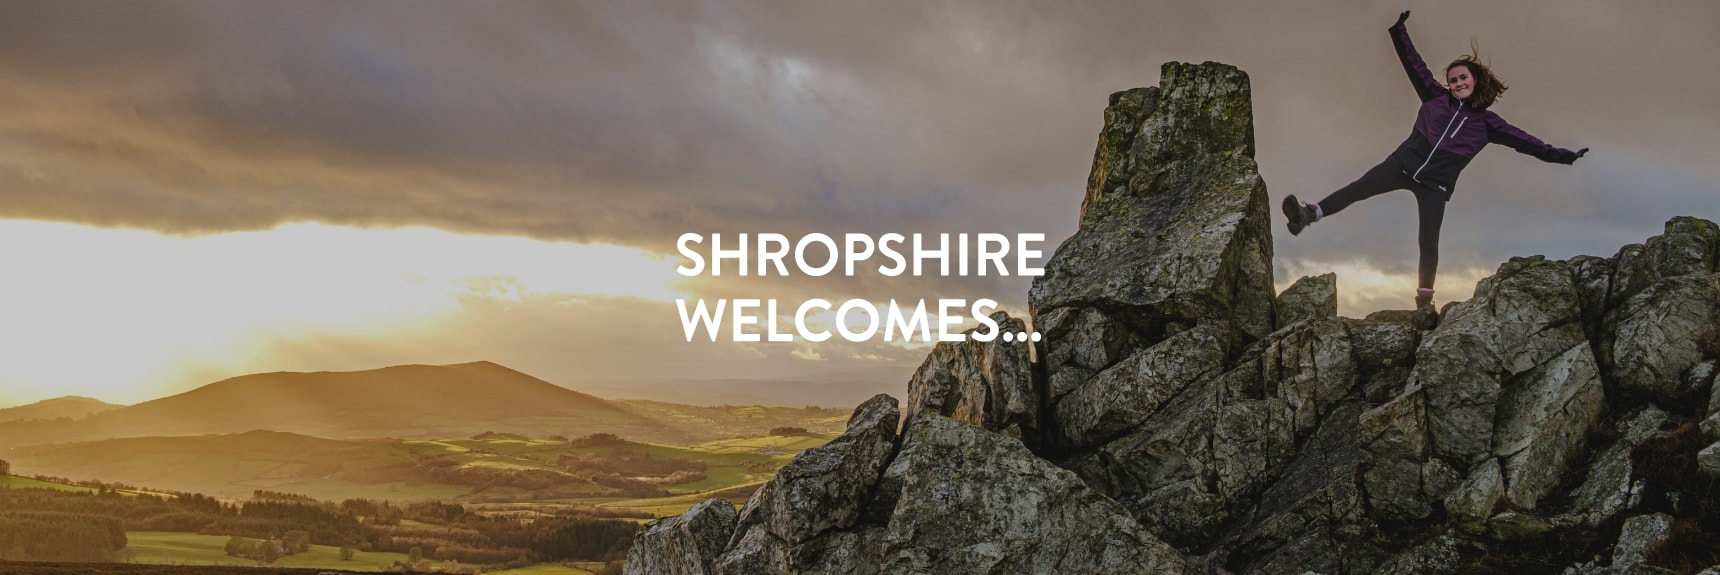 Shropshire Welcomes